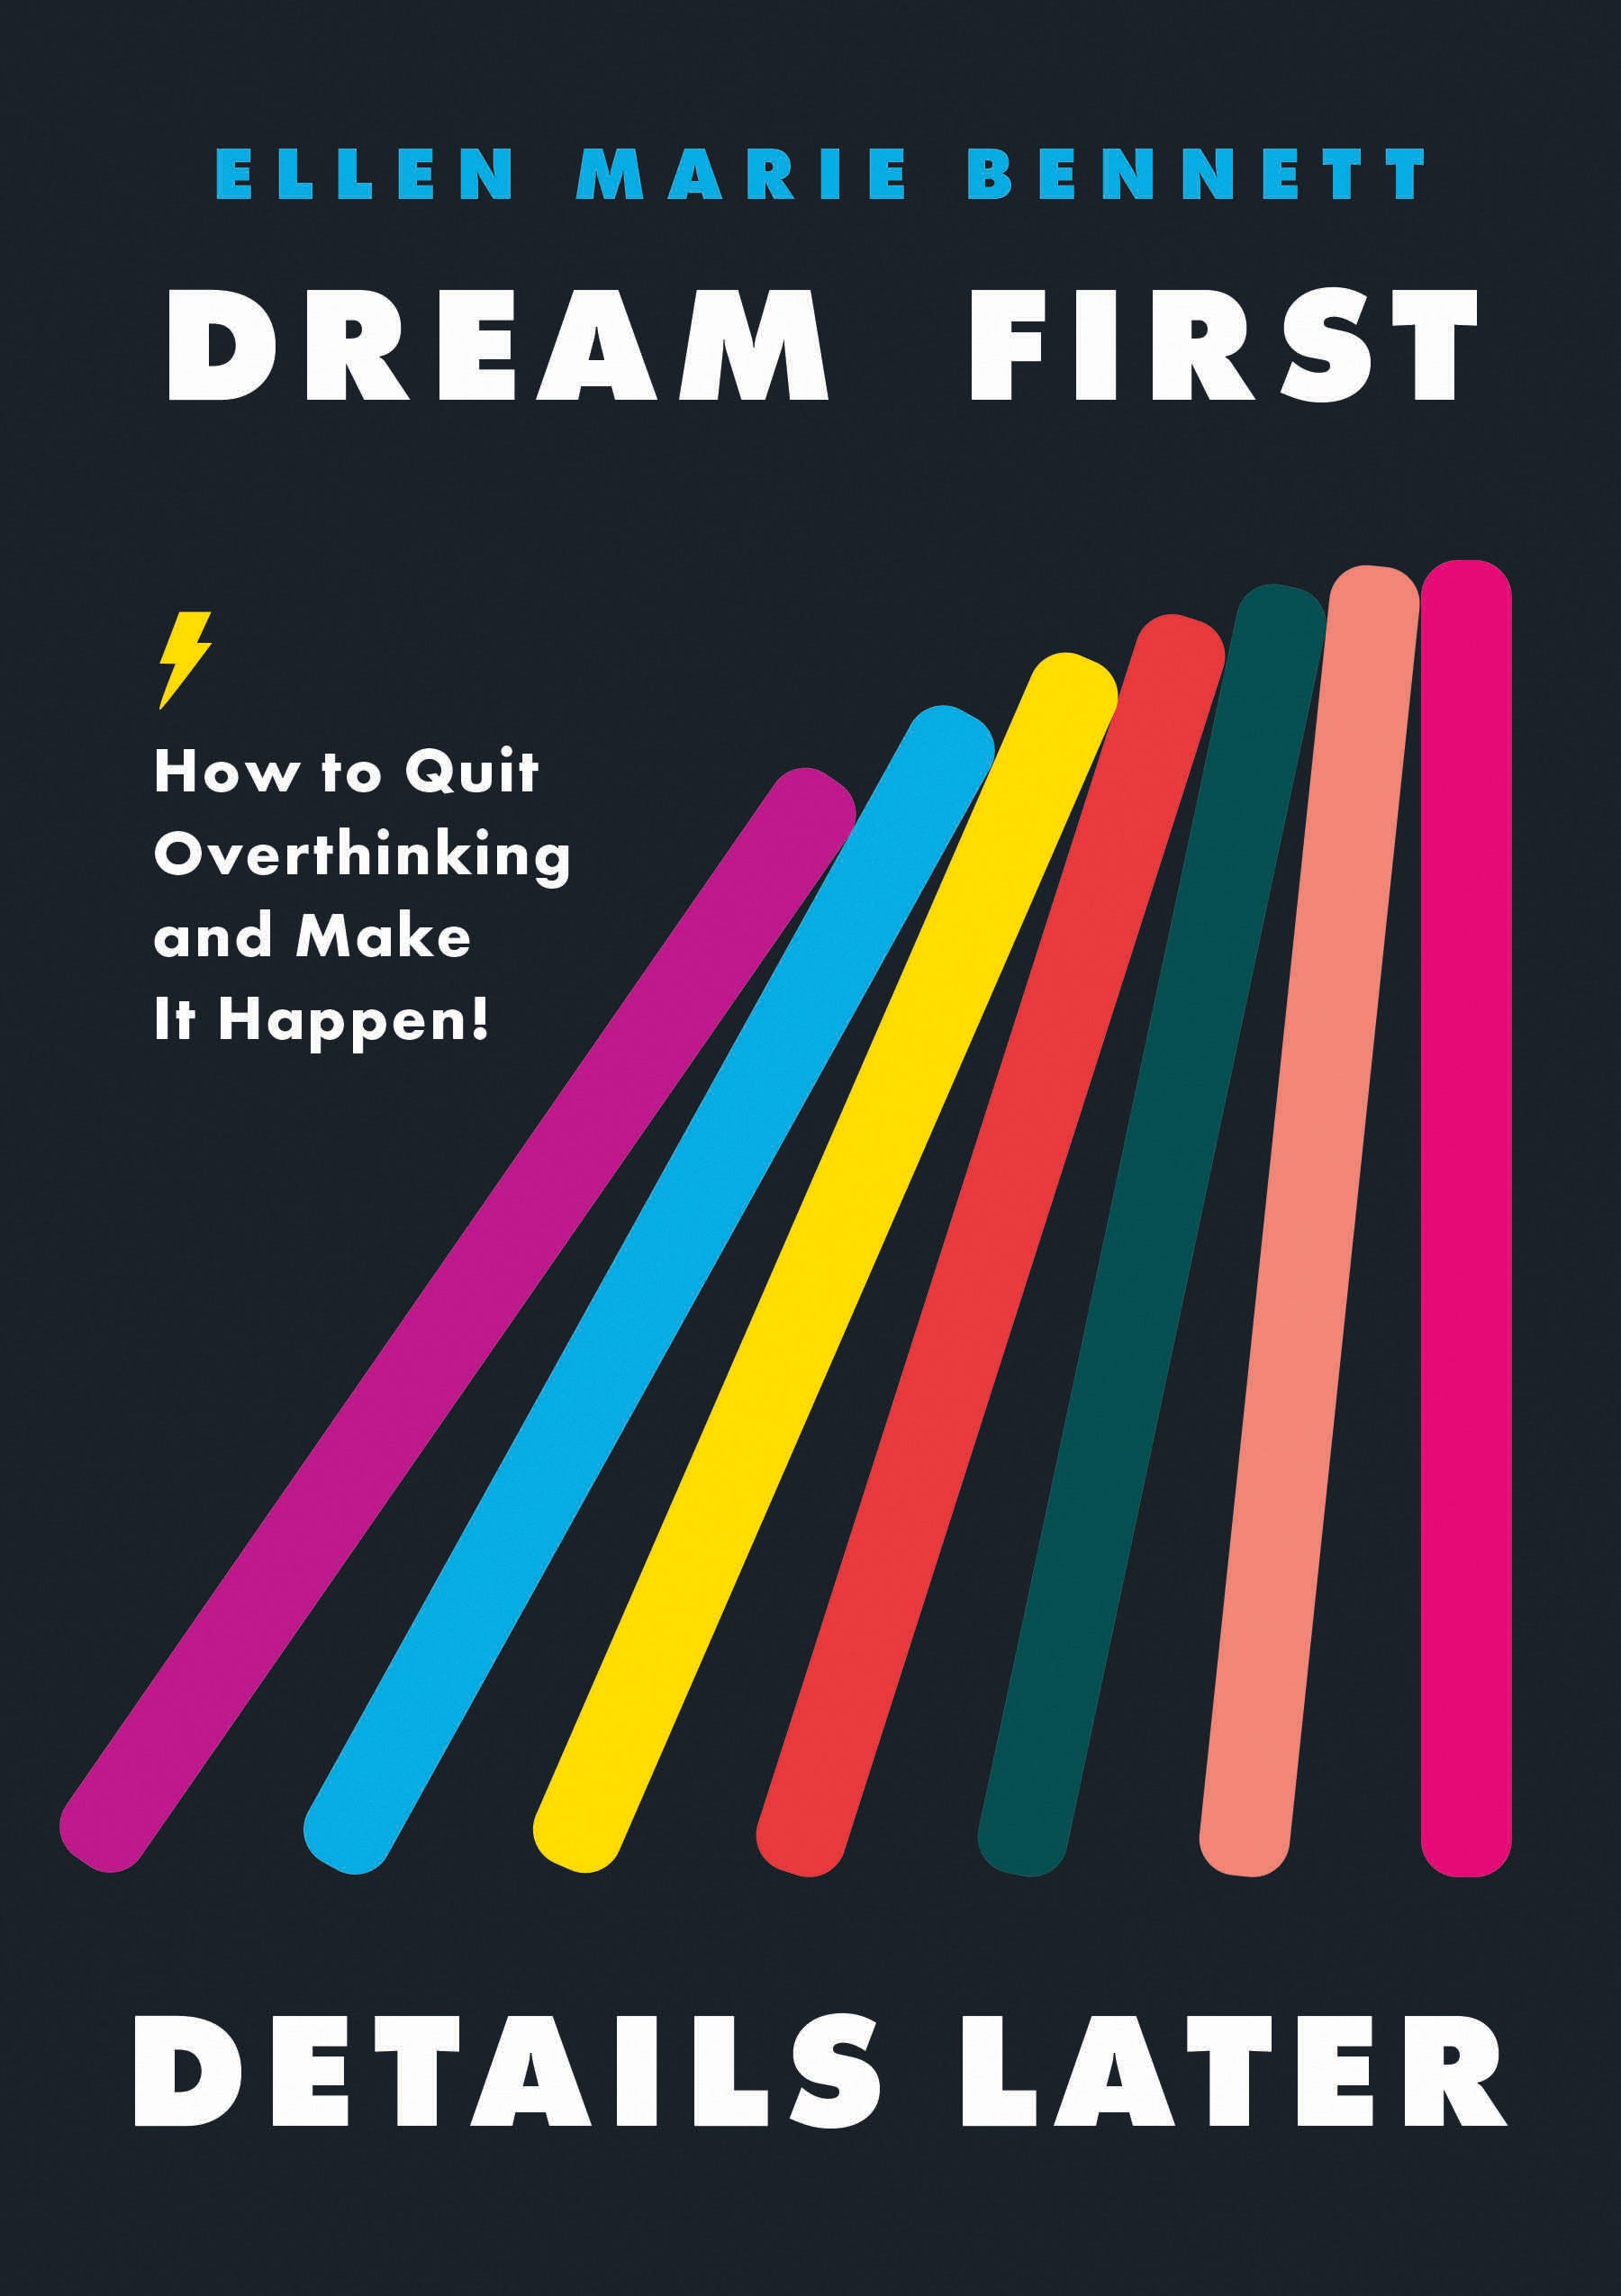 Book cover of "Dream First Details Later" by Ellen Marie Bennett